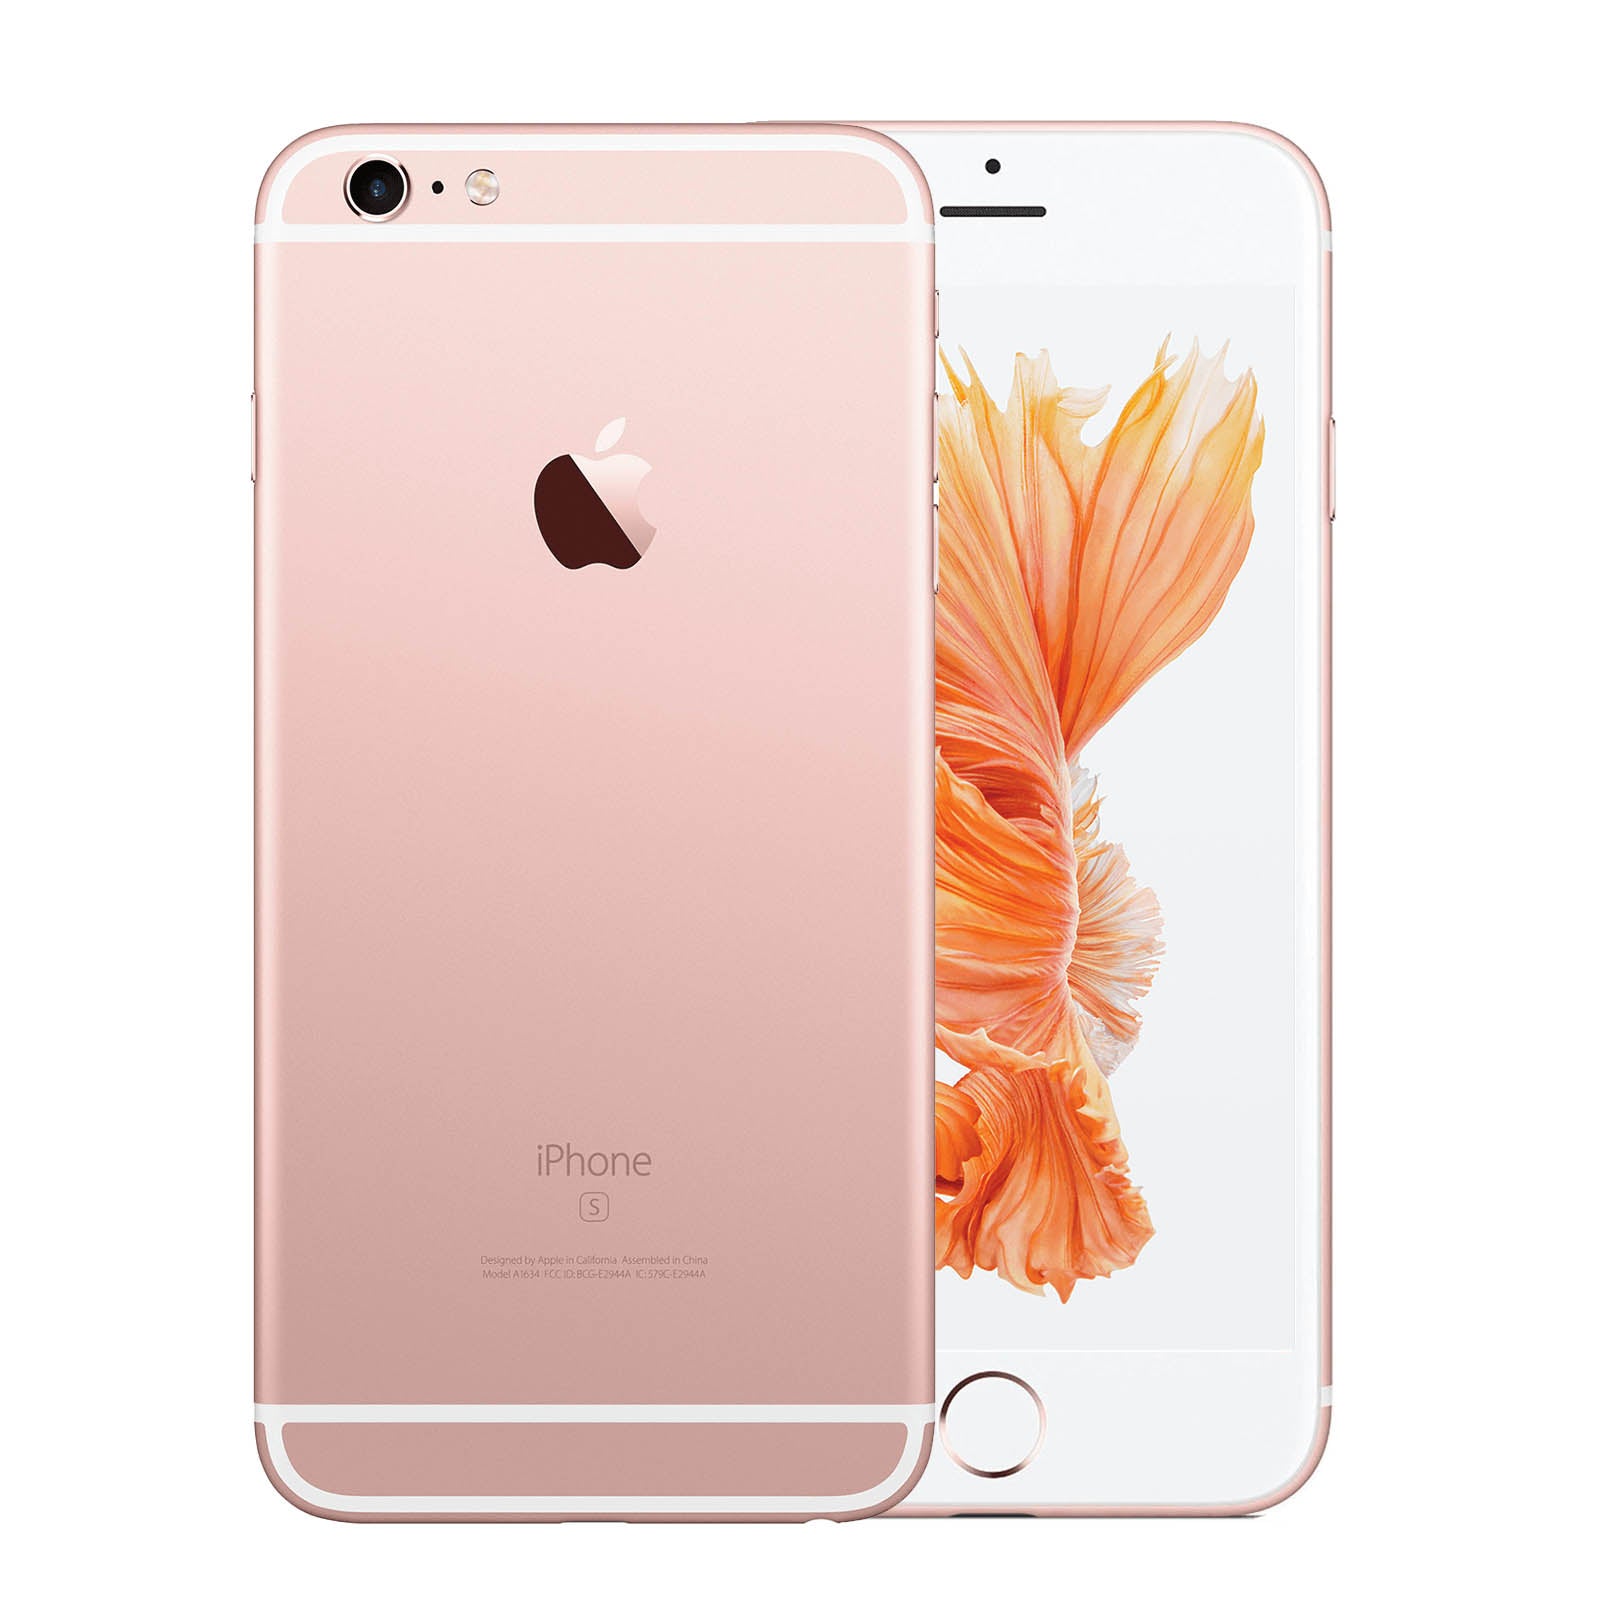 Apple iPhone 6S 16GB Rose Gold Good - Unlocked